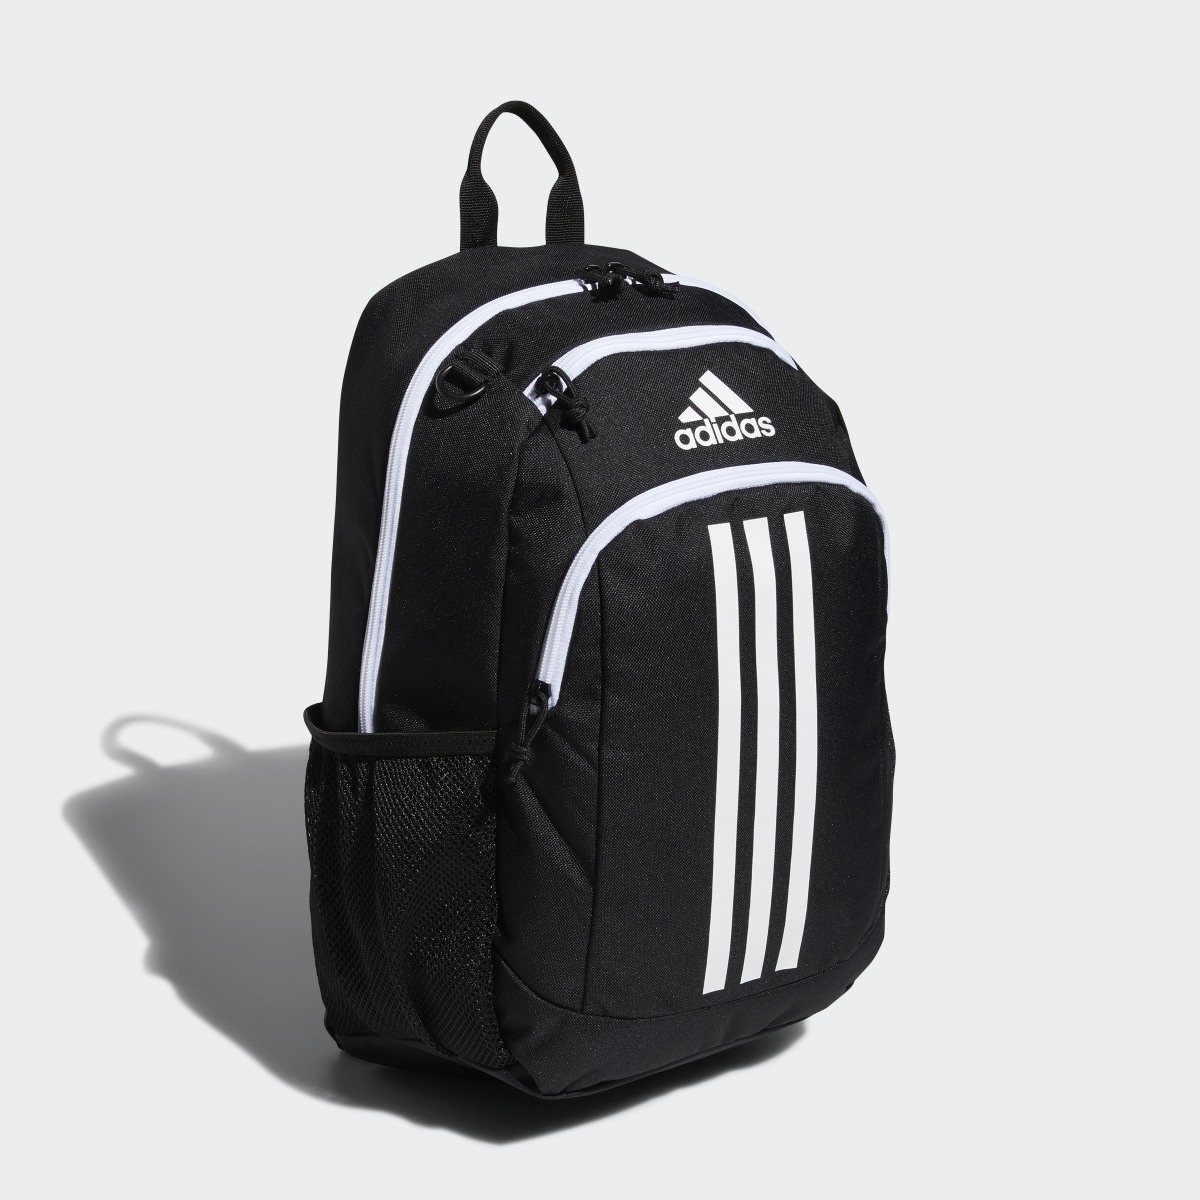 Adidas Creator Backpack. 4